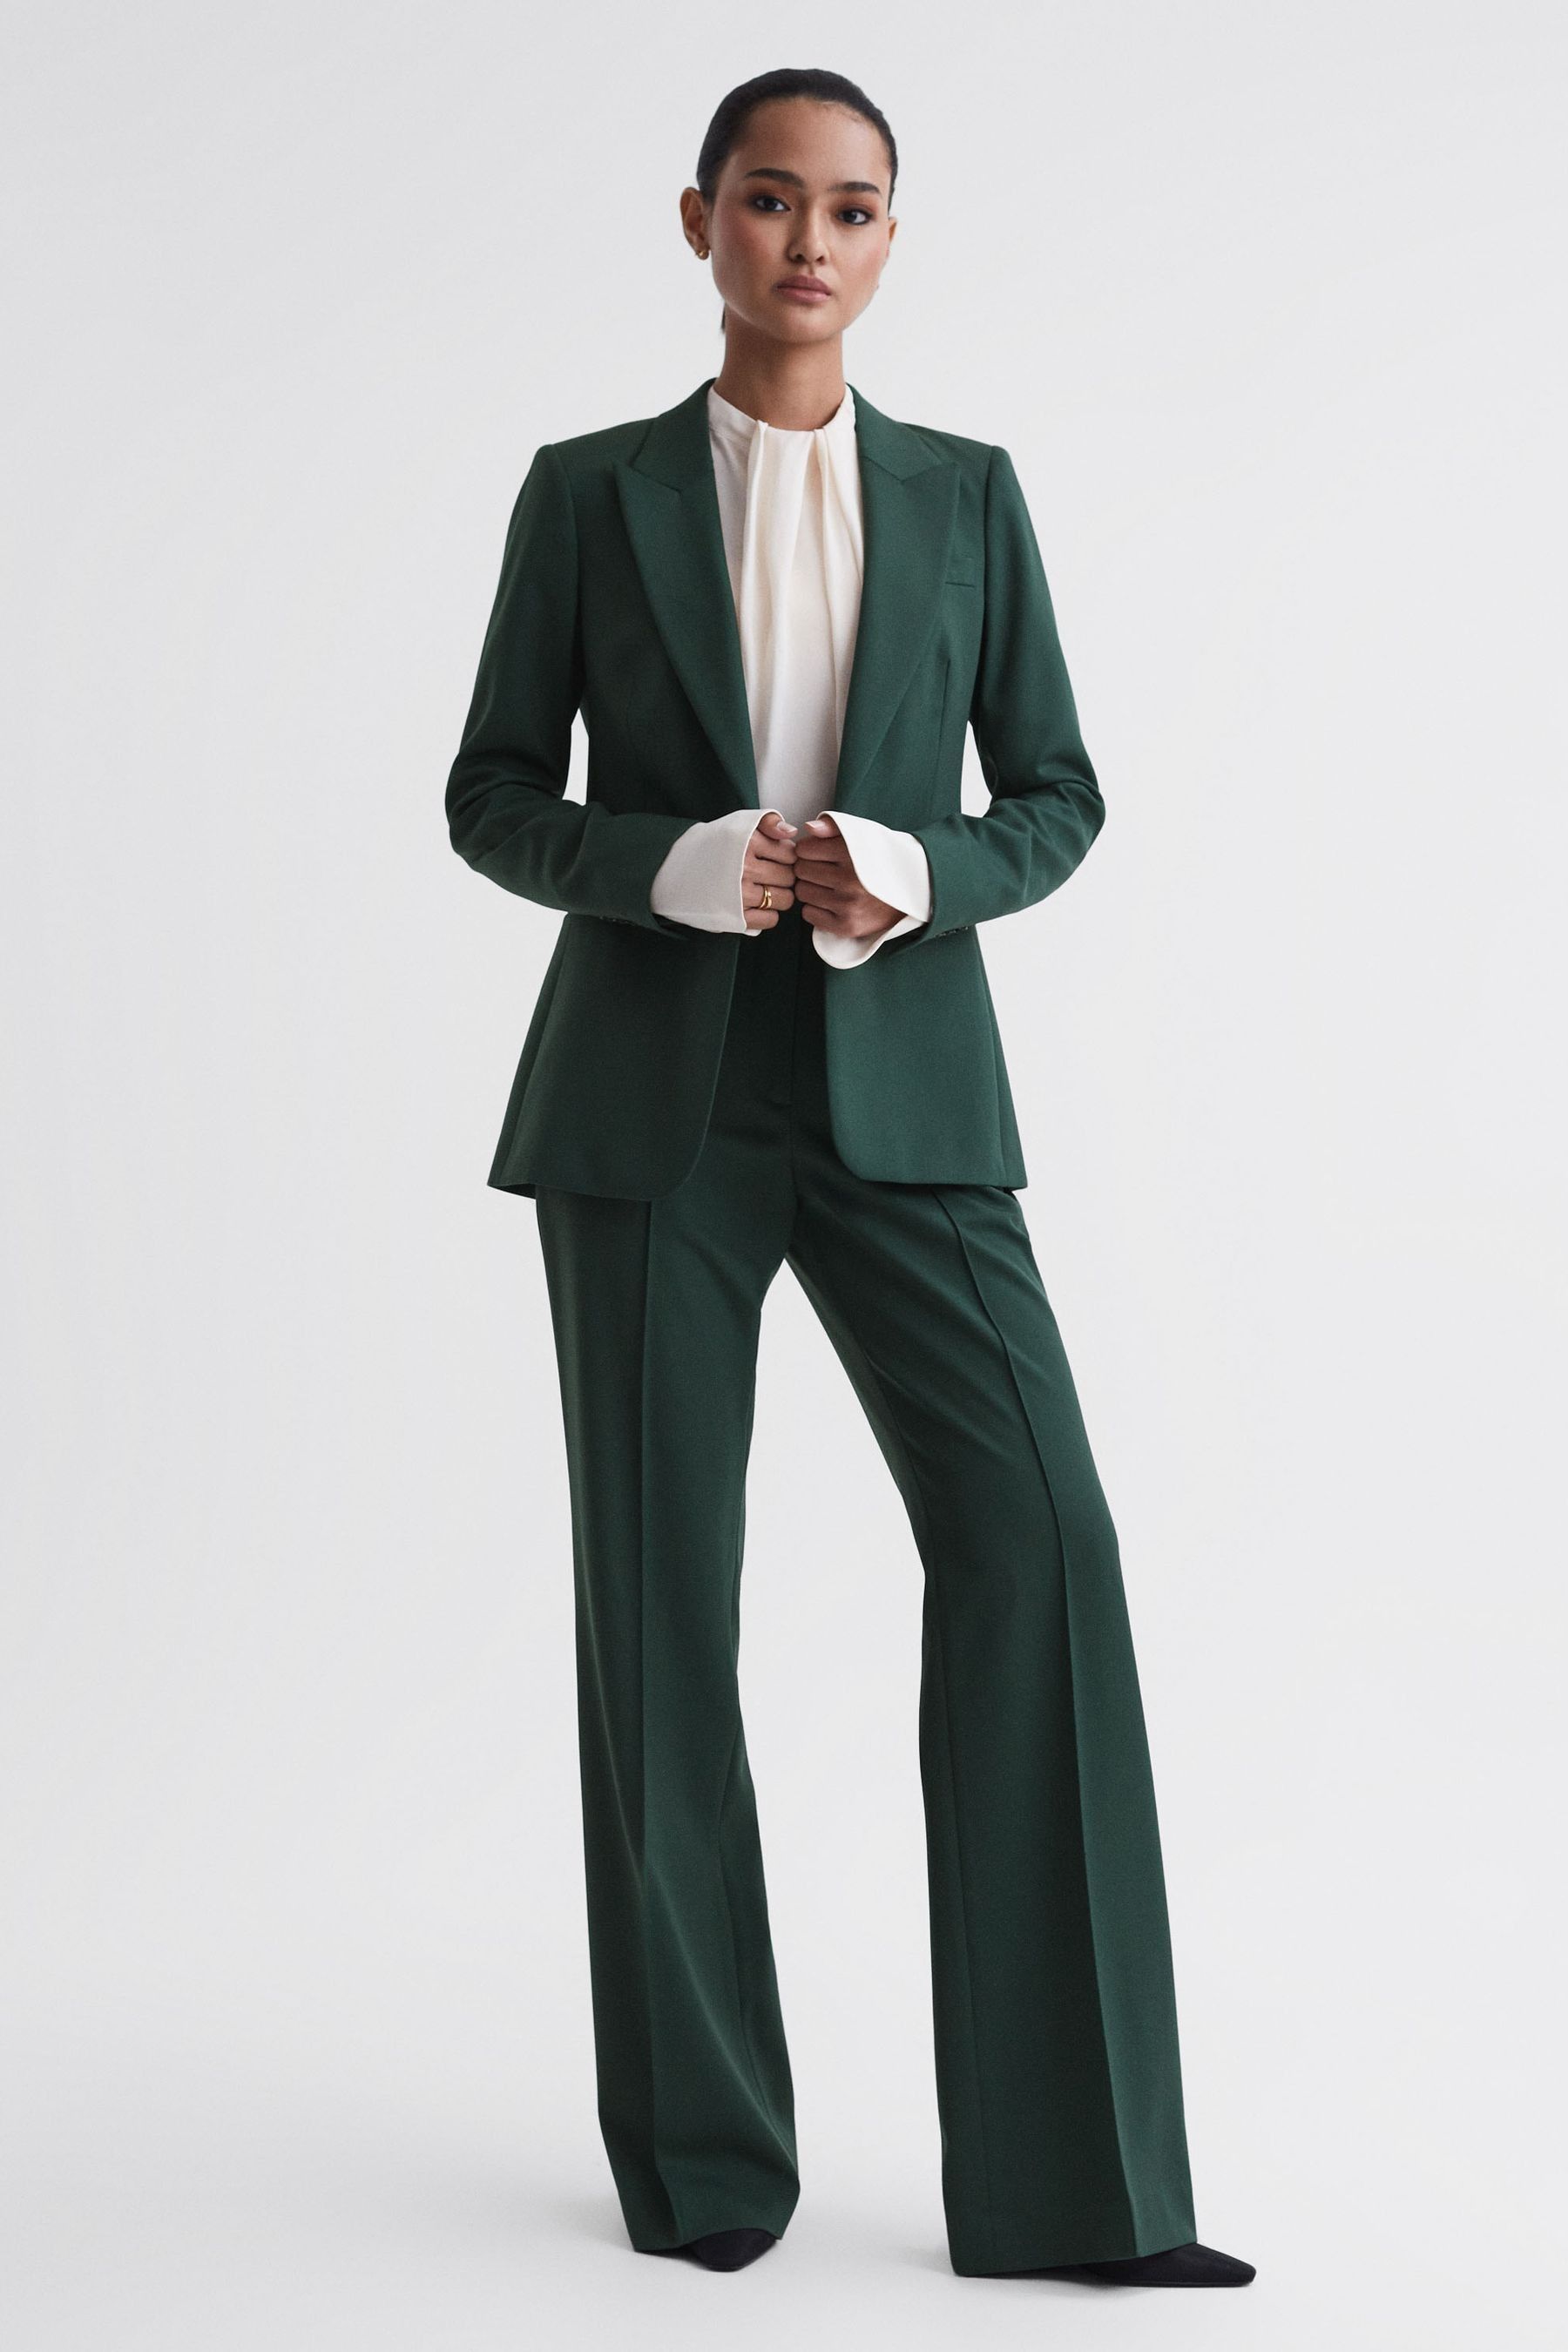 Reiss Jade - Bottle Green Petite Tailored Fit Single Breasted Suit Blazer, Us 4